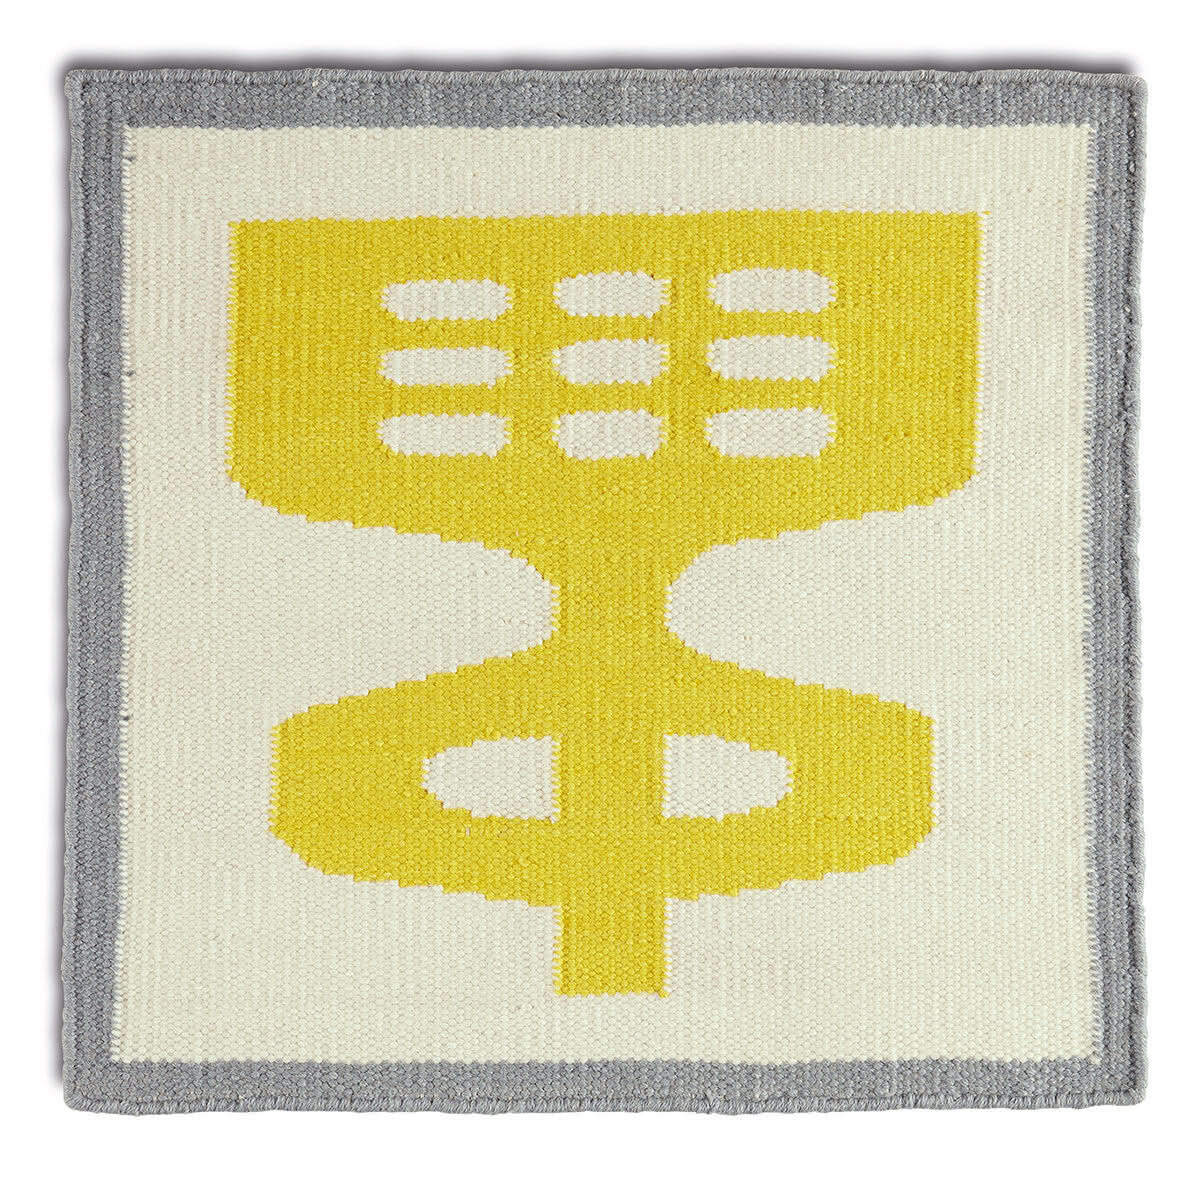 An abstract yellow and gray rug.